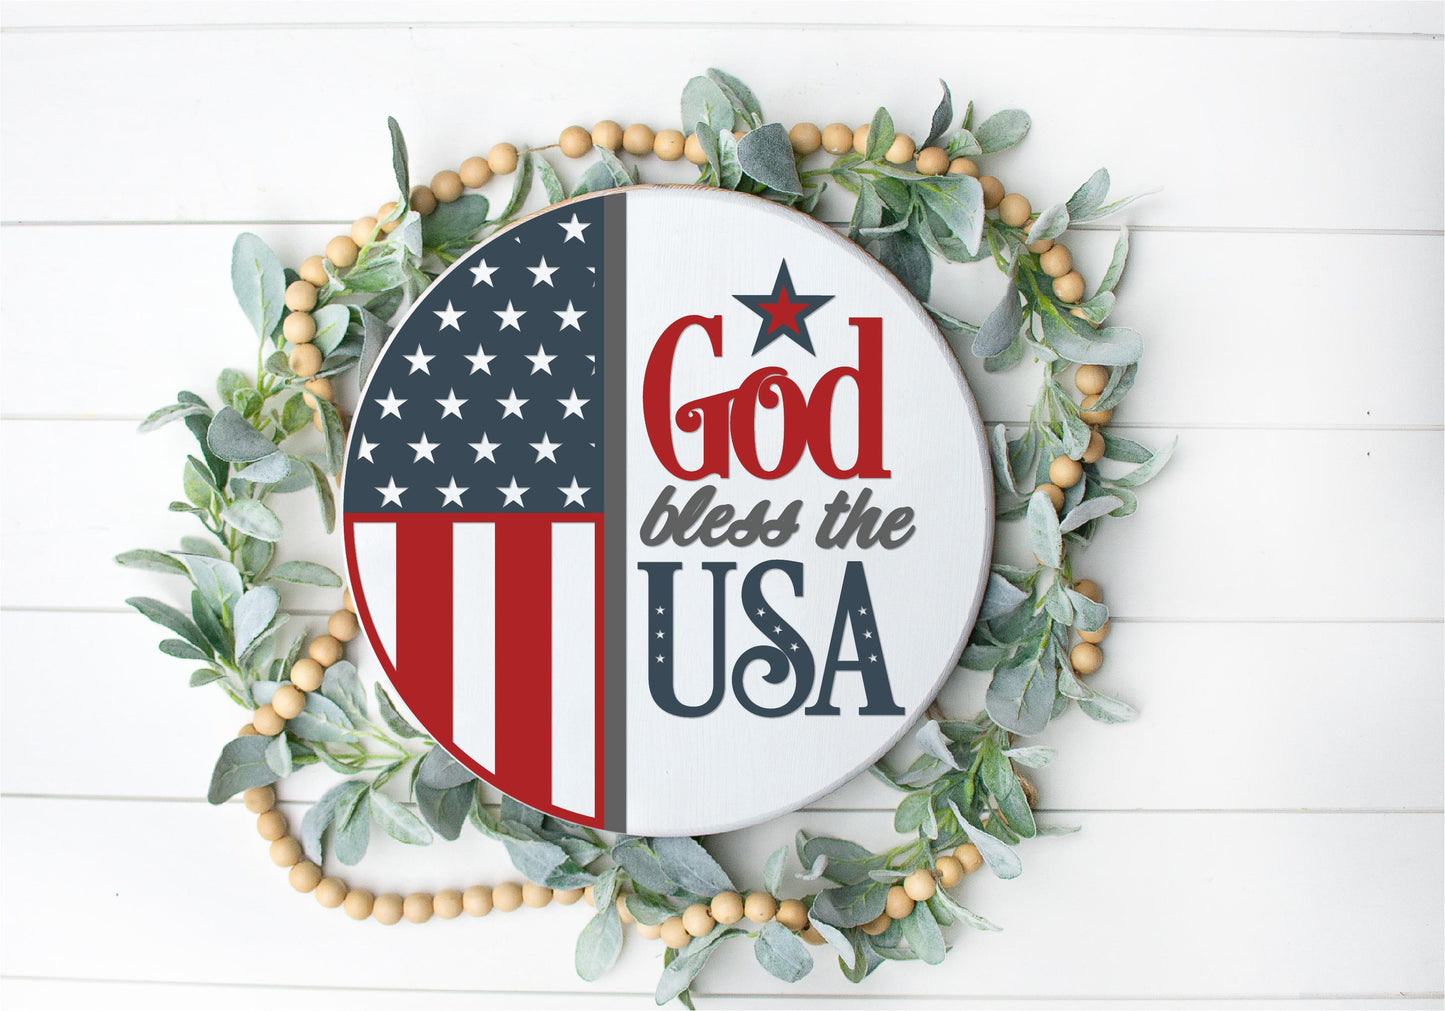 God bless the USA DIY sign